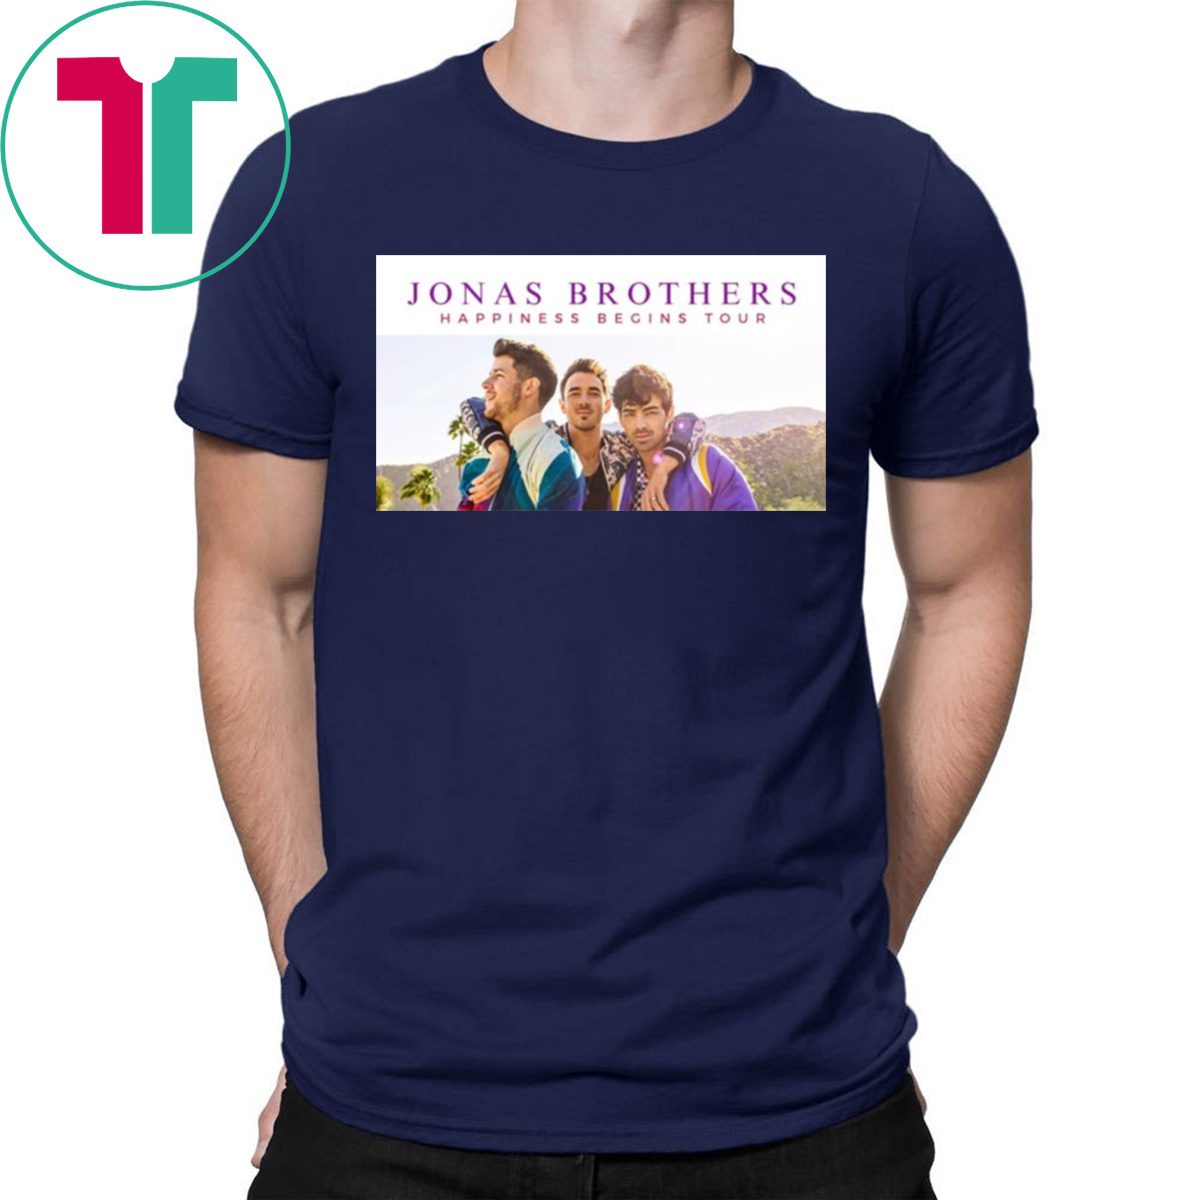 Jonas Brothers Happiness Begins Tour Tee Shirt